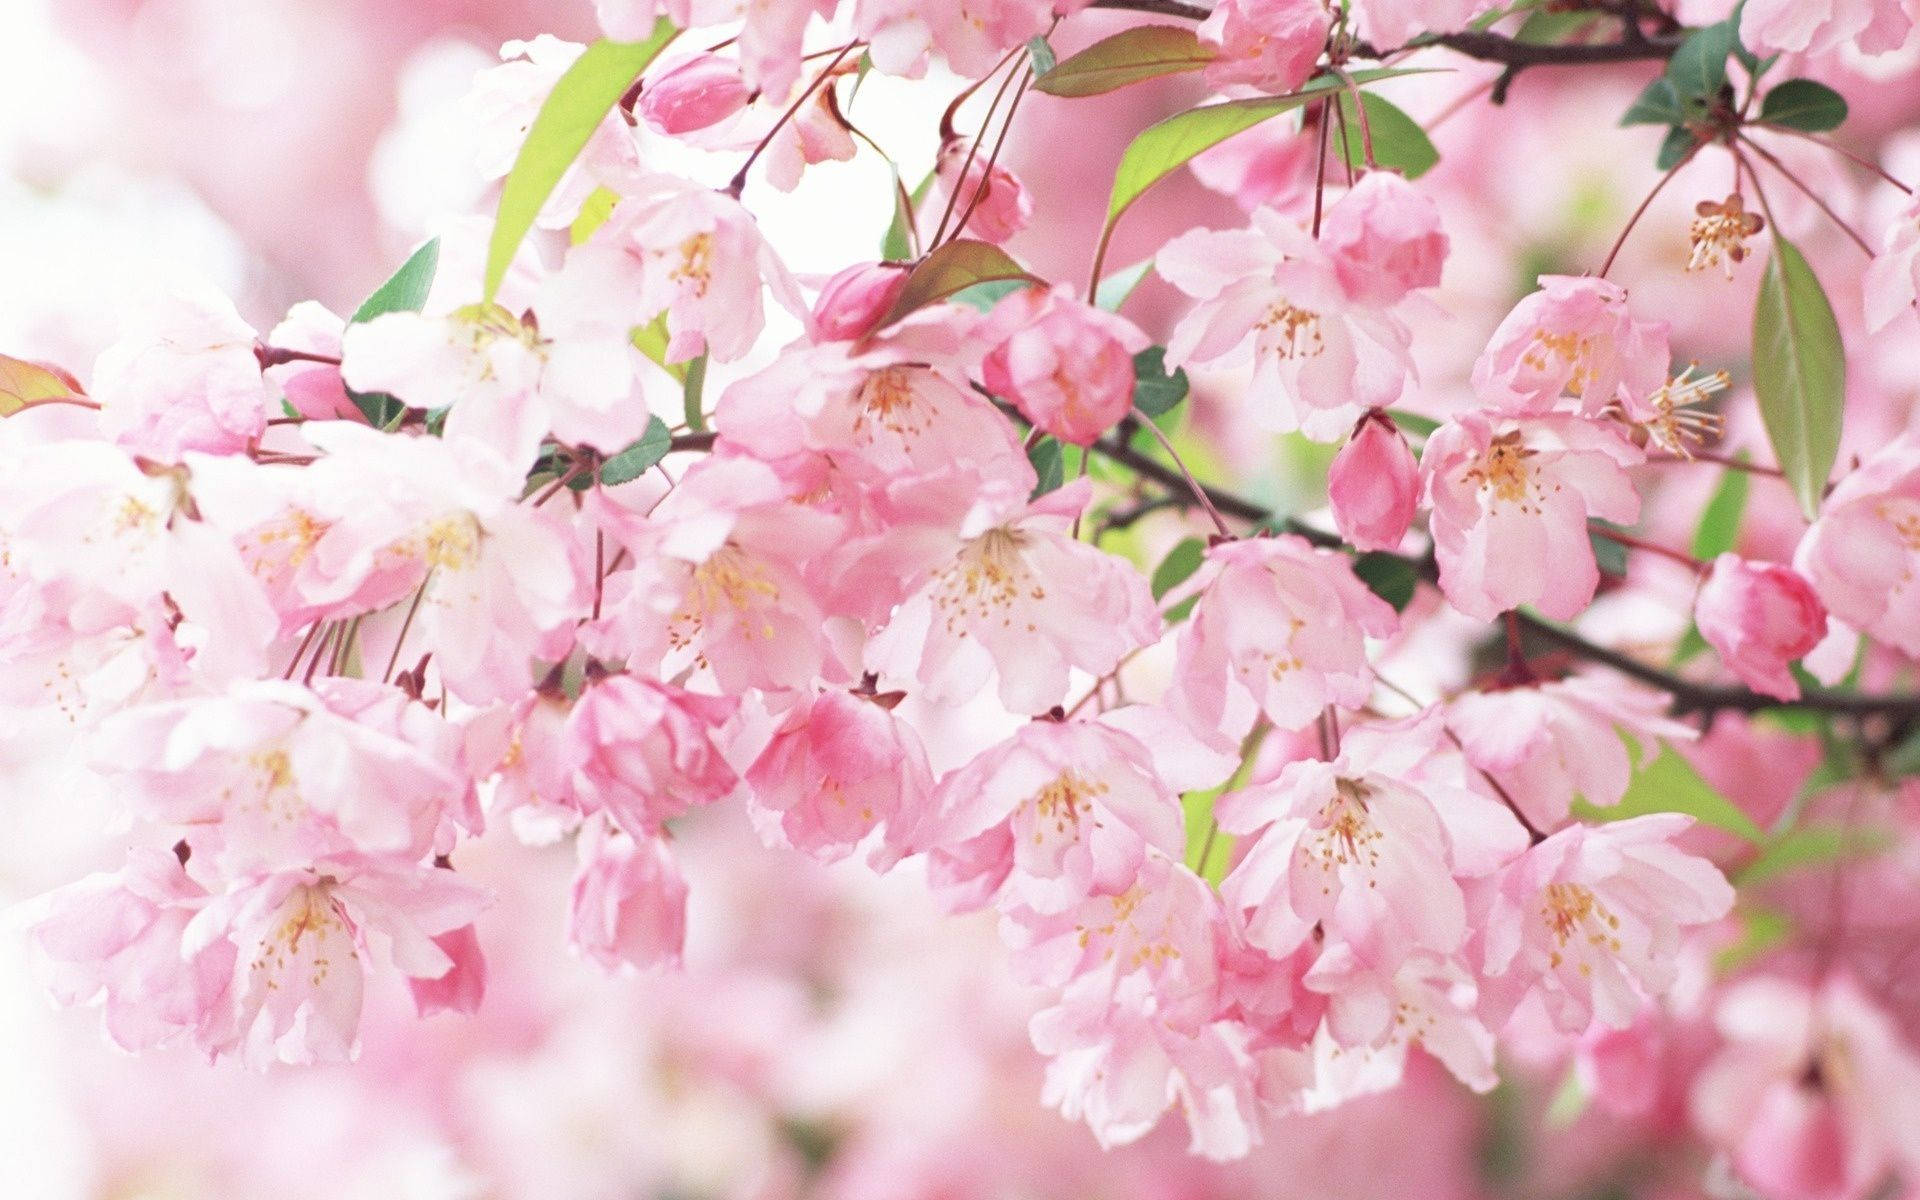 "Detail of a sakura tree in full bloom" Wallpaper